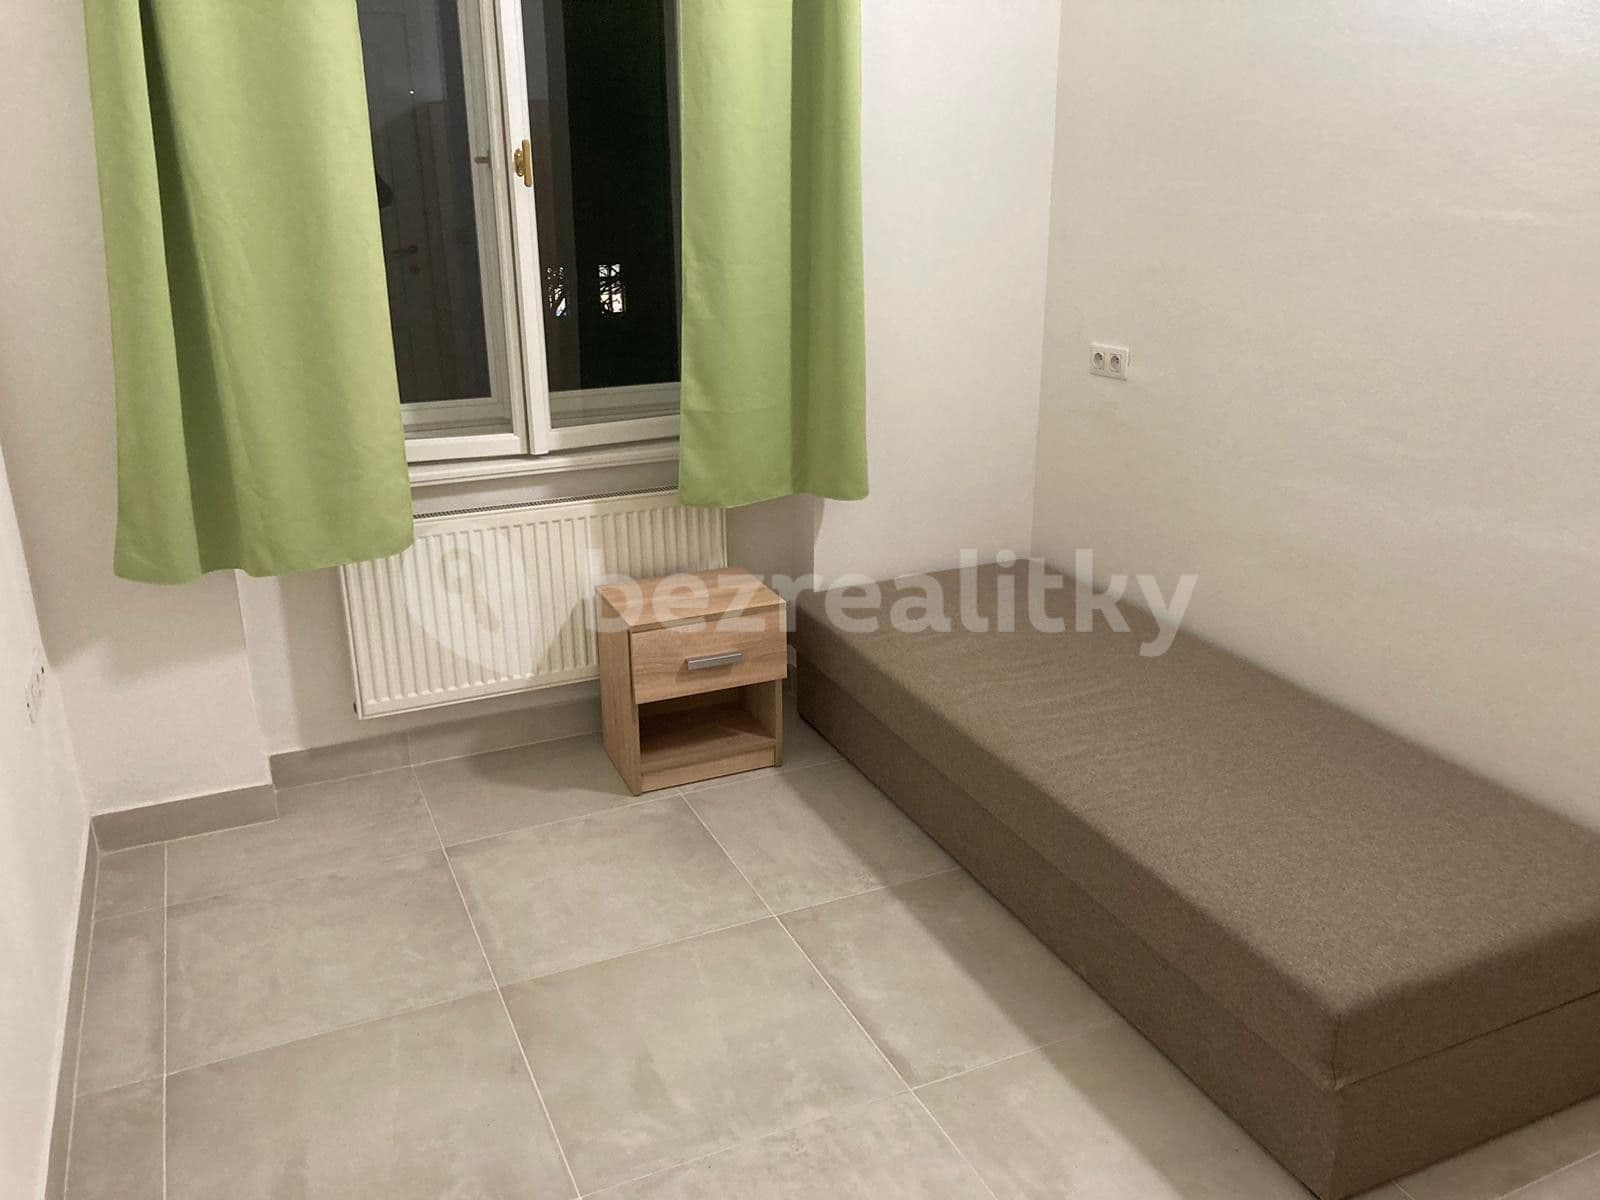 2 bedroom flat for sale, 45 m², Tyršova, Prague, Prague